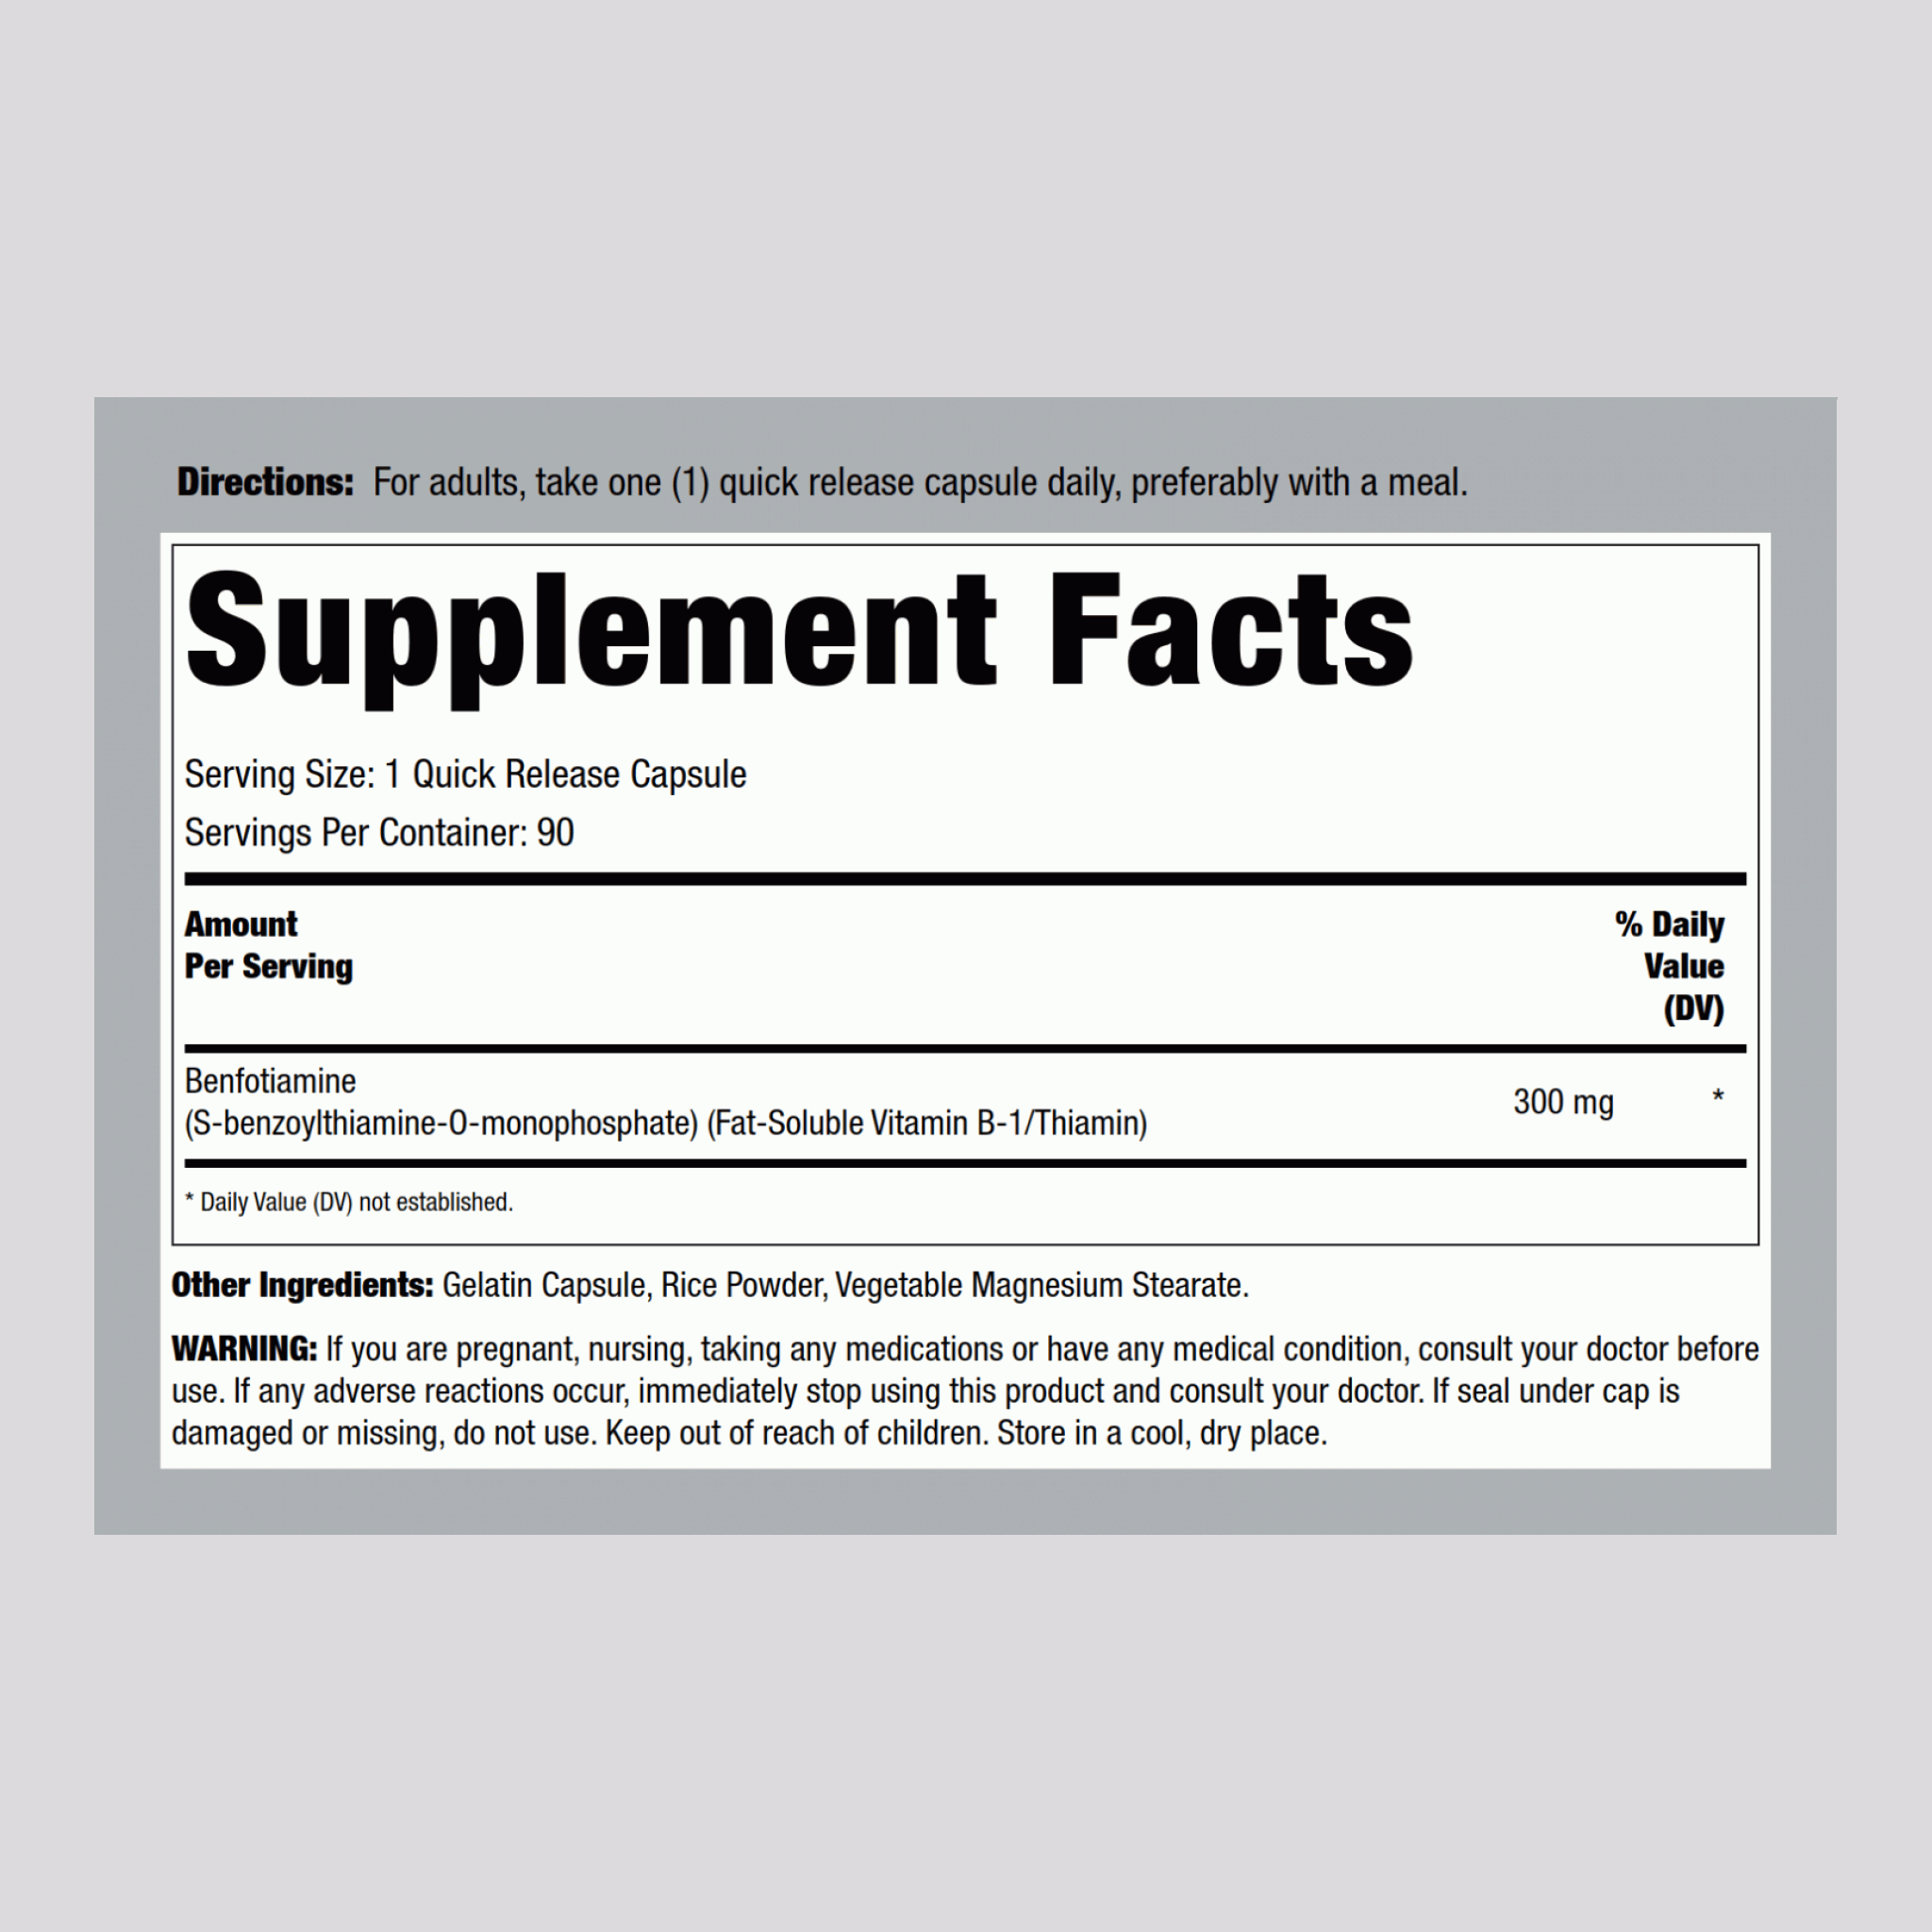 Benfotiamine, 300 mg, 90 Capsules